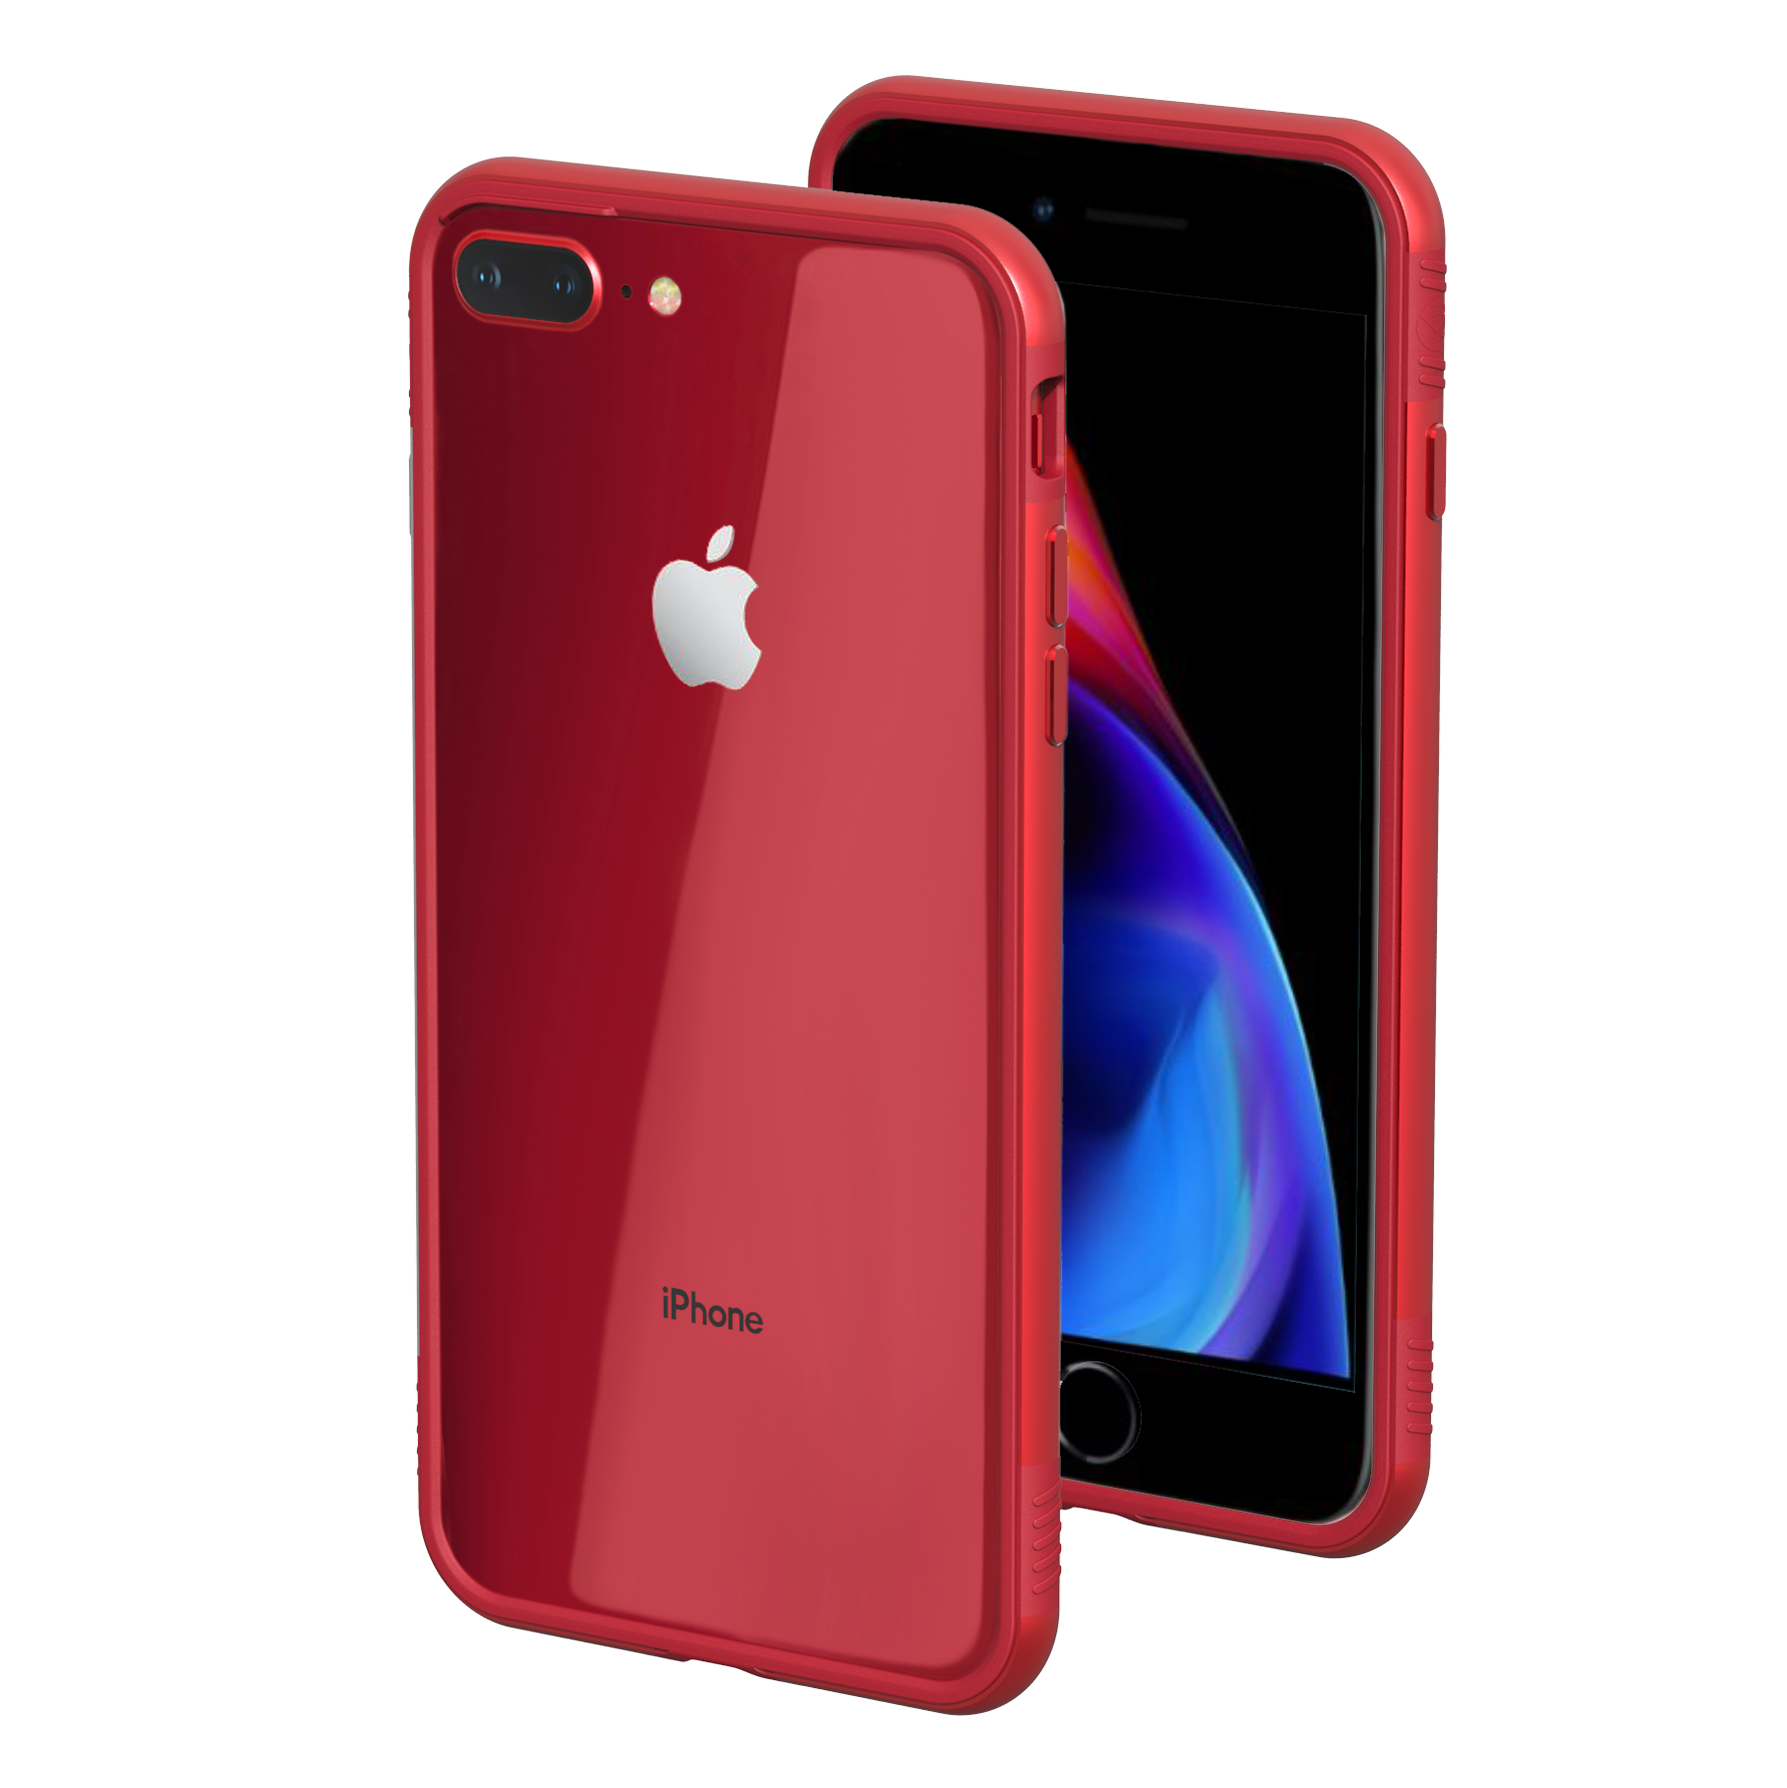 Apple iphone плюс. Apple iphone 8 Plus. Apple iphone 8 Plus красный. Iphone 8 Plus PNG. Iphone 8 Plus 128gb красный.